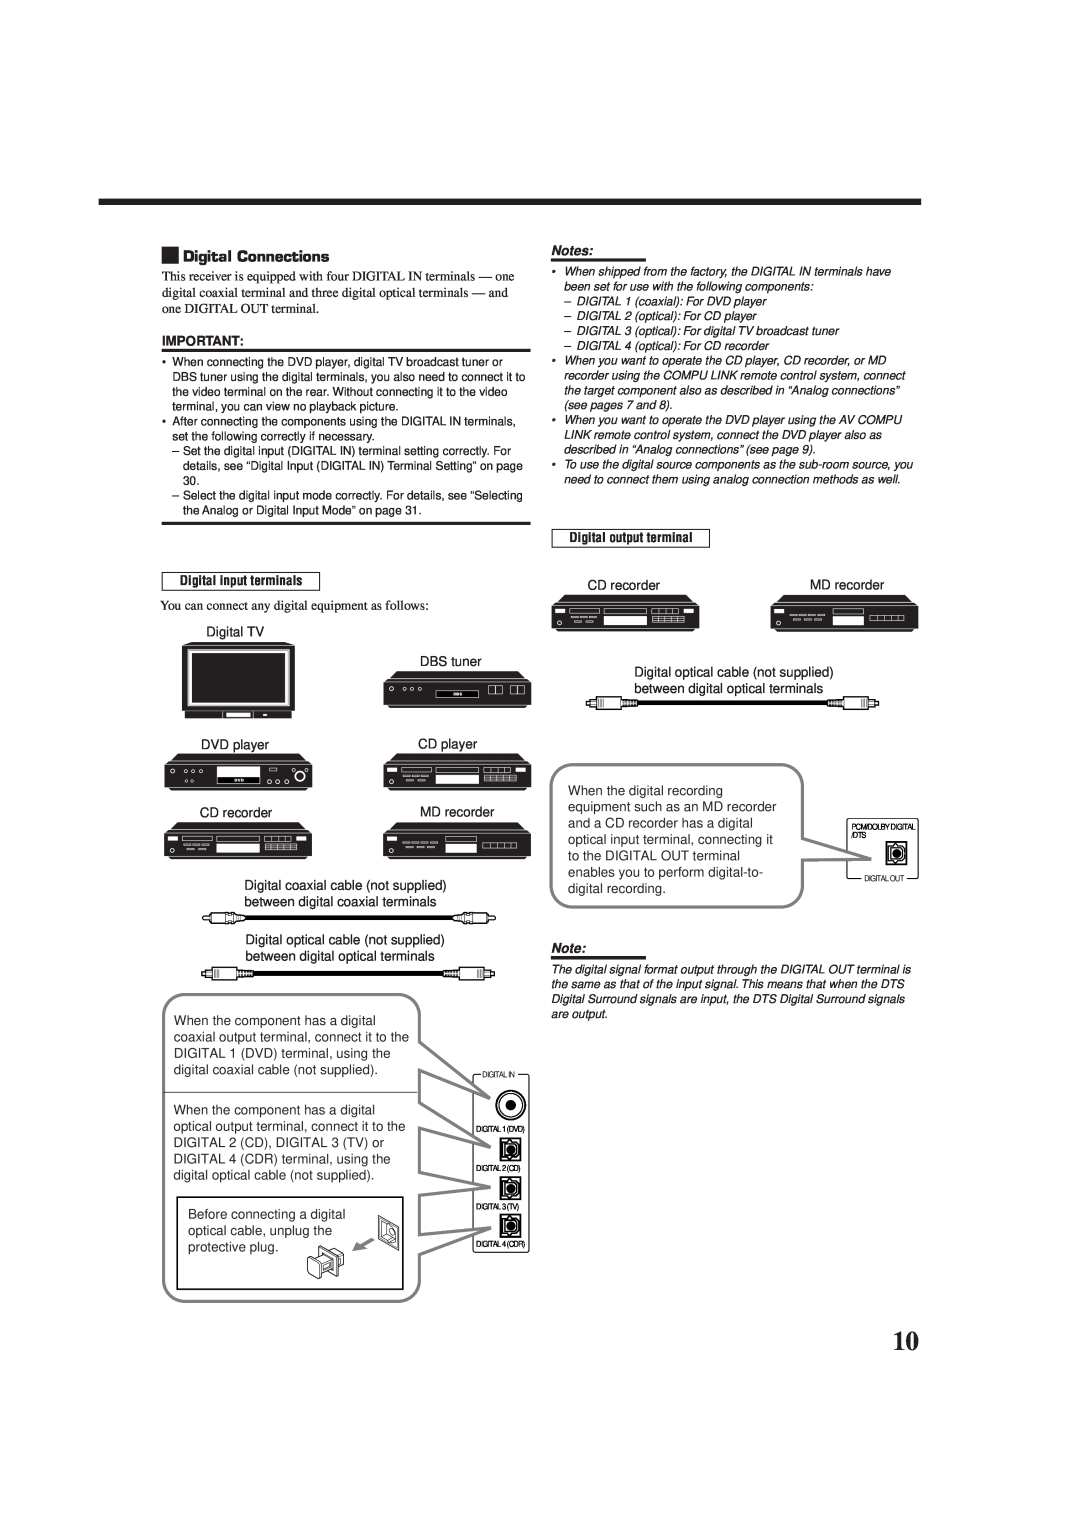 JVC RX-9010VBK manual Digital Connections, Digital input terminals, Digital output terminal 